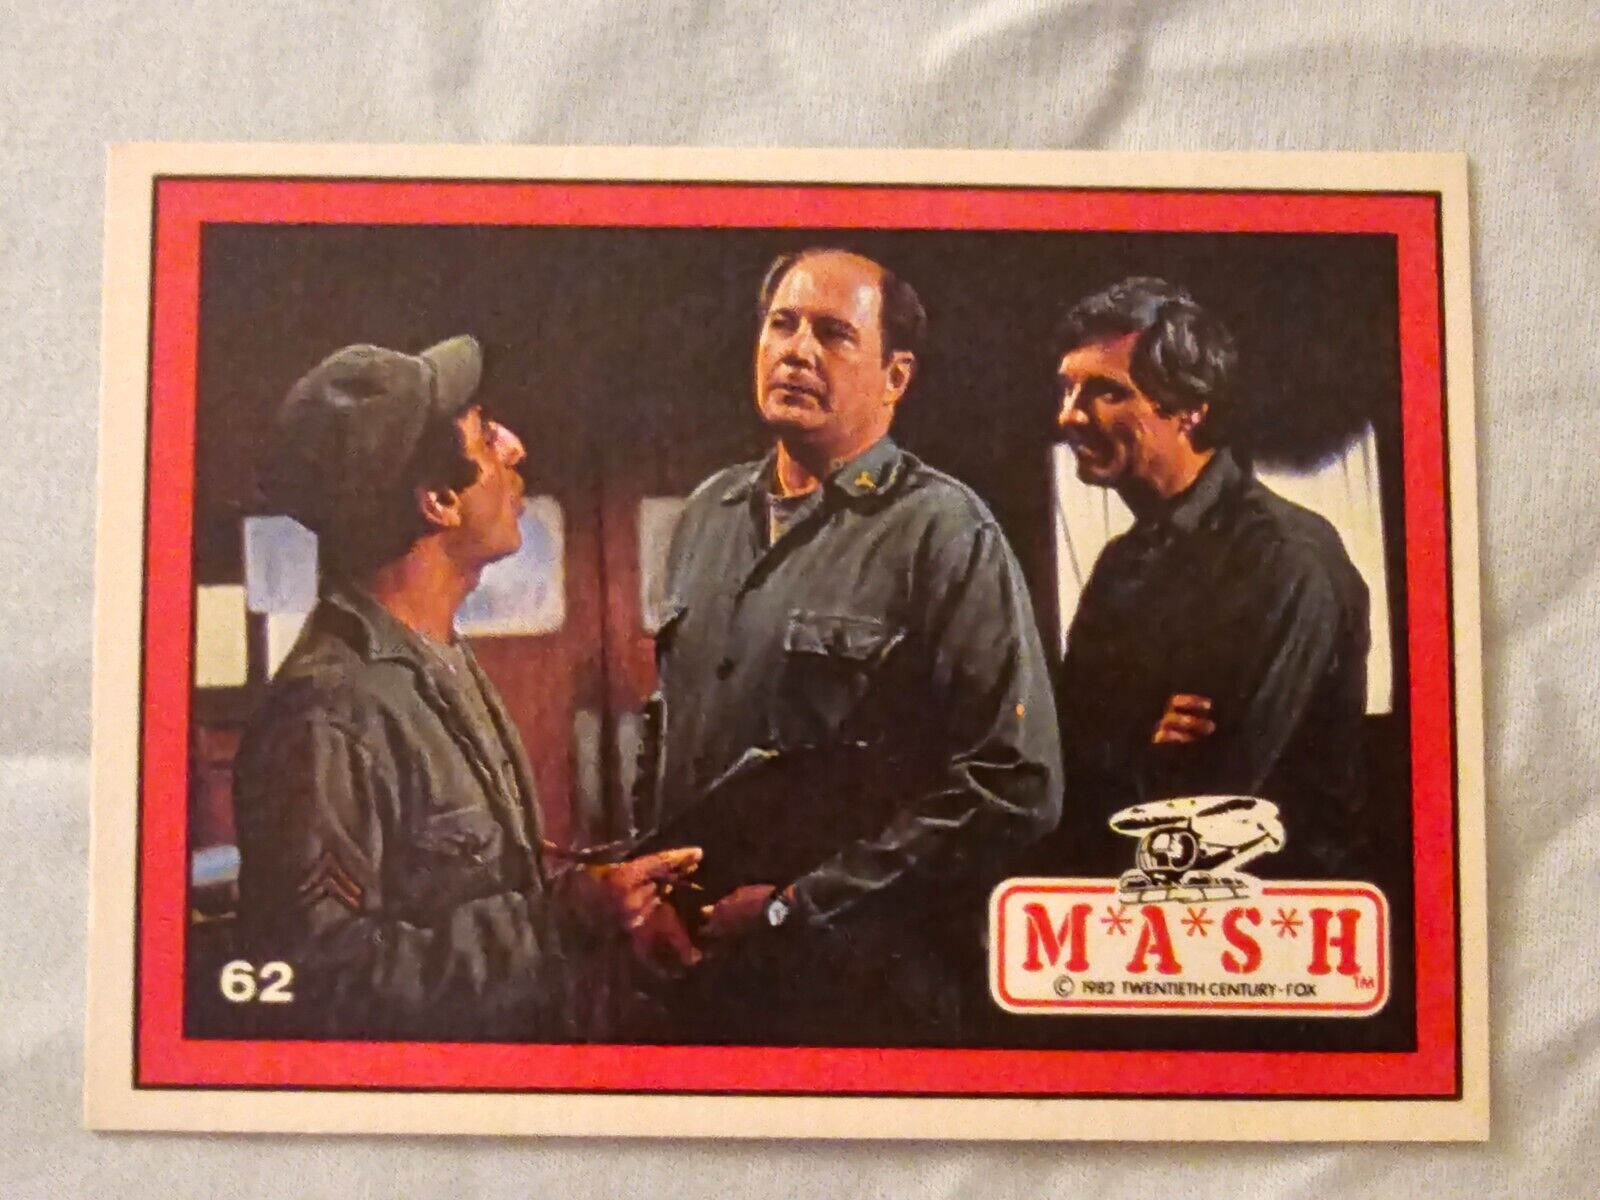 1982 Donruss MASH Trading Card #62